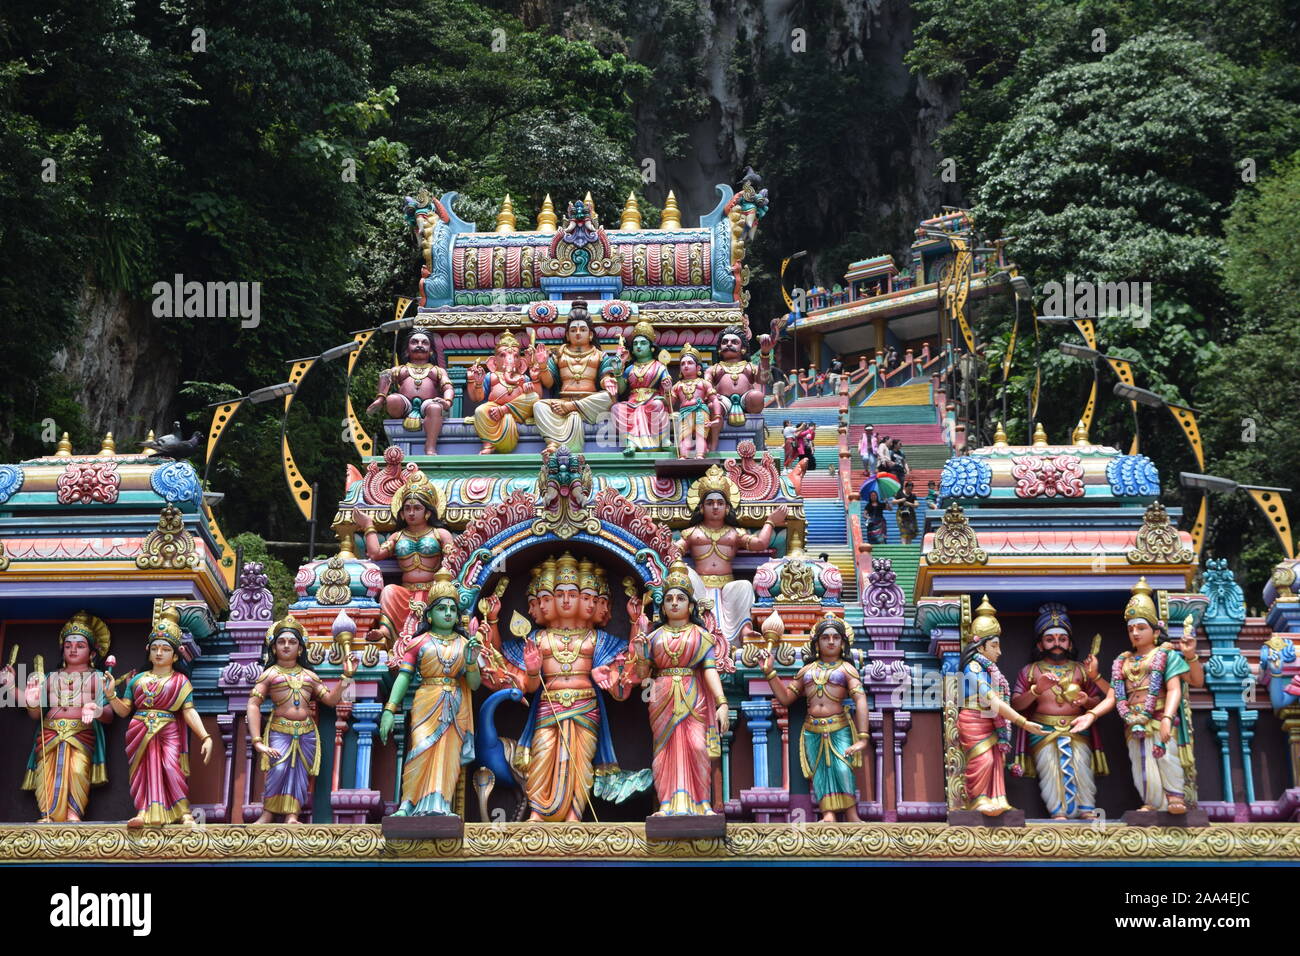 Images from Batu Caves, a Hindu Shrine in Selangor, Malaysia Stock Photo